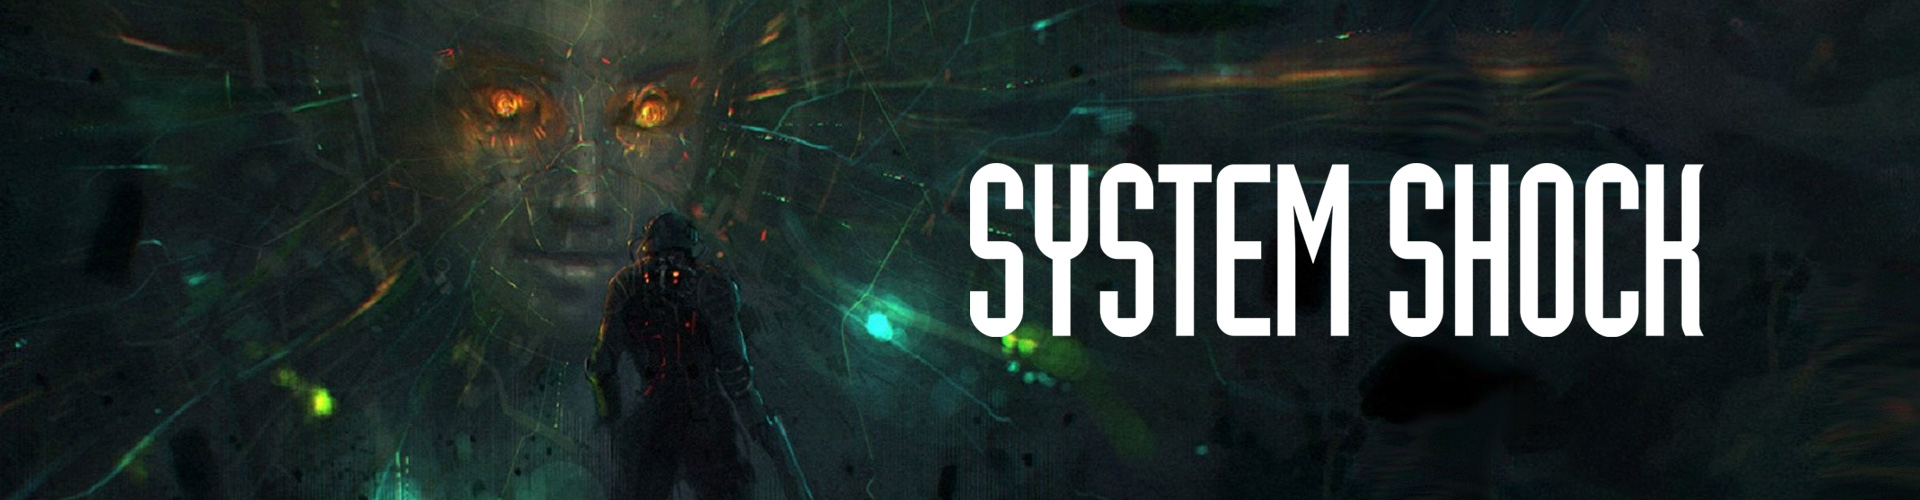 System Shock: een science fiction horror FPS